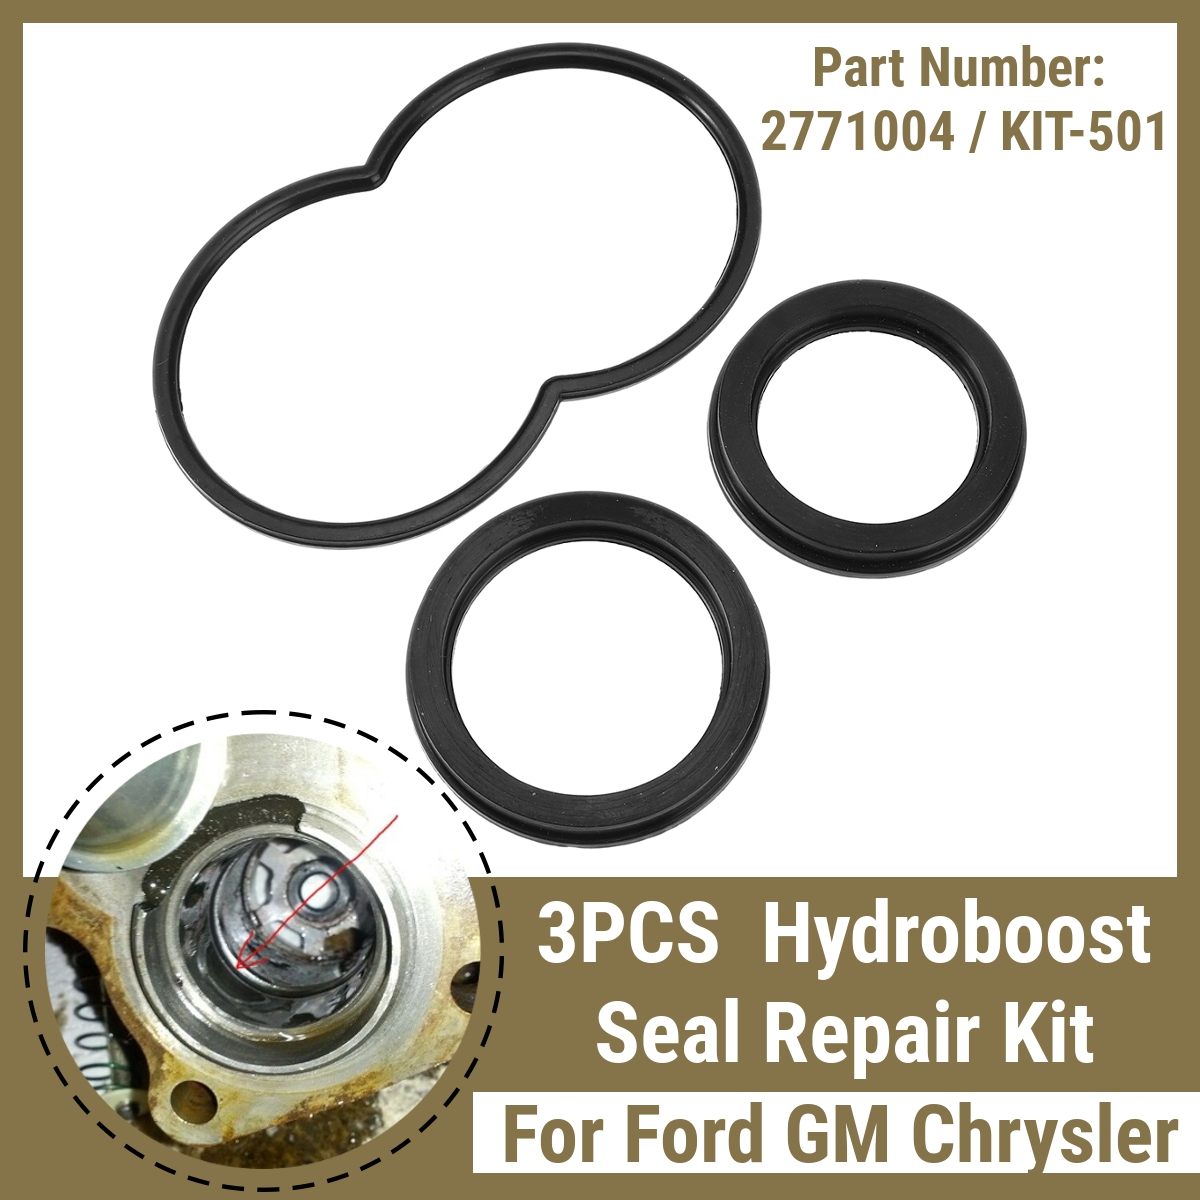 3Pcs-Hydroboost-Repair-Kit-for-Chevy-GMC-Ford-GM-Dodge-Seal-Kit-Hydro-Boost-Leak-Repair-Kit-1778723-1